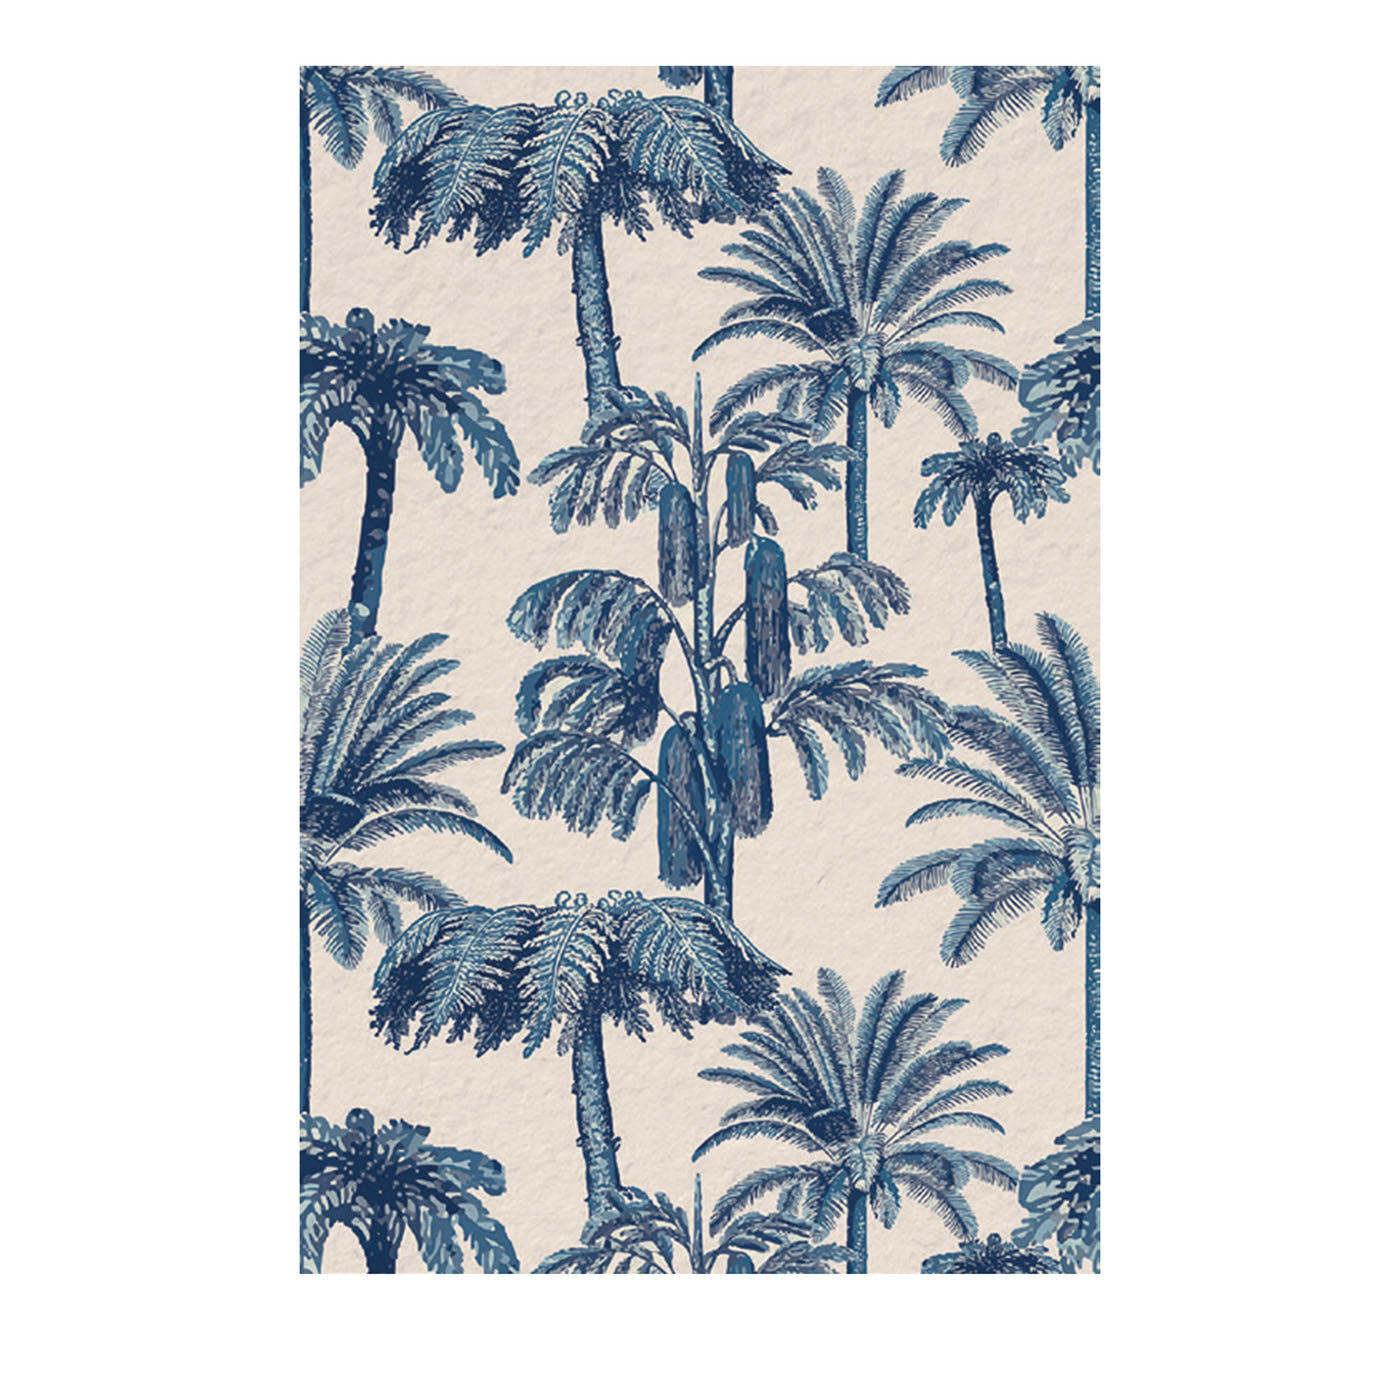 Blue Palms Facade 22 Outdoor Wallpaper - Main view